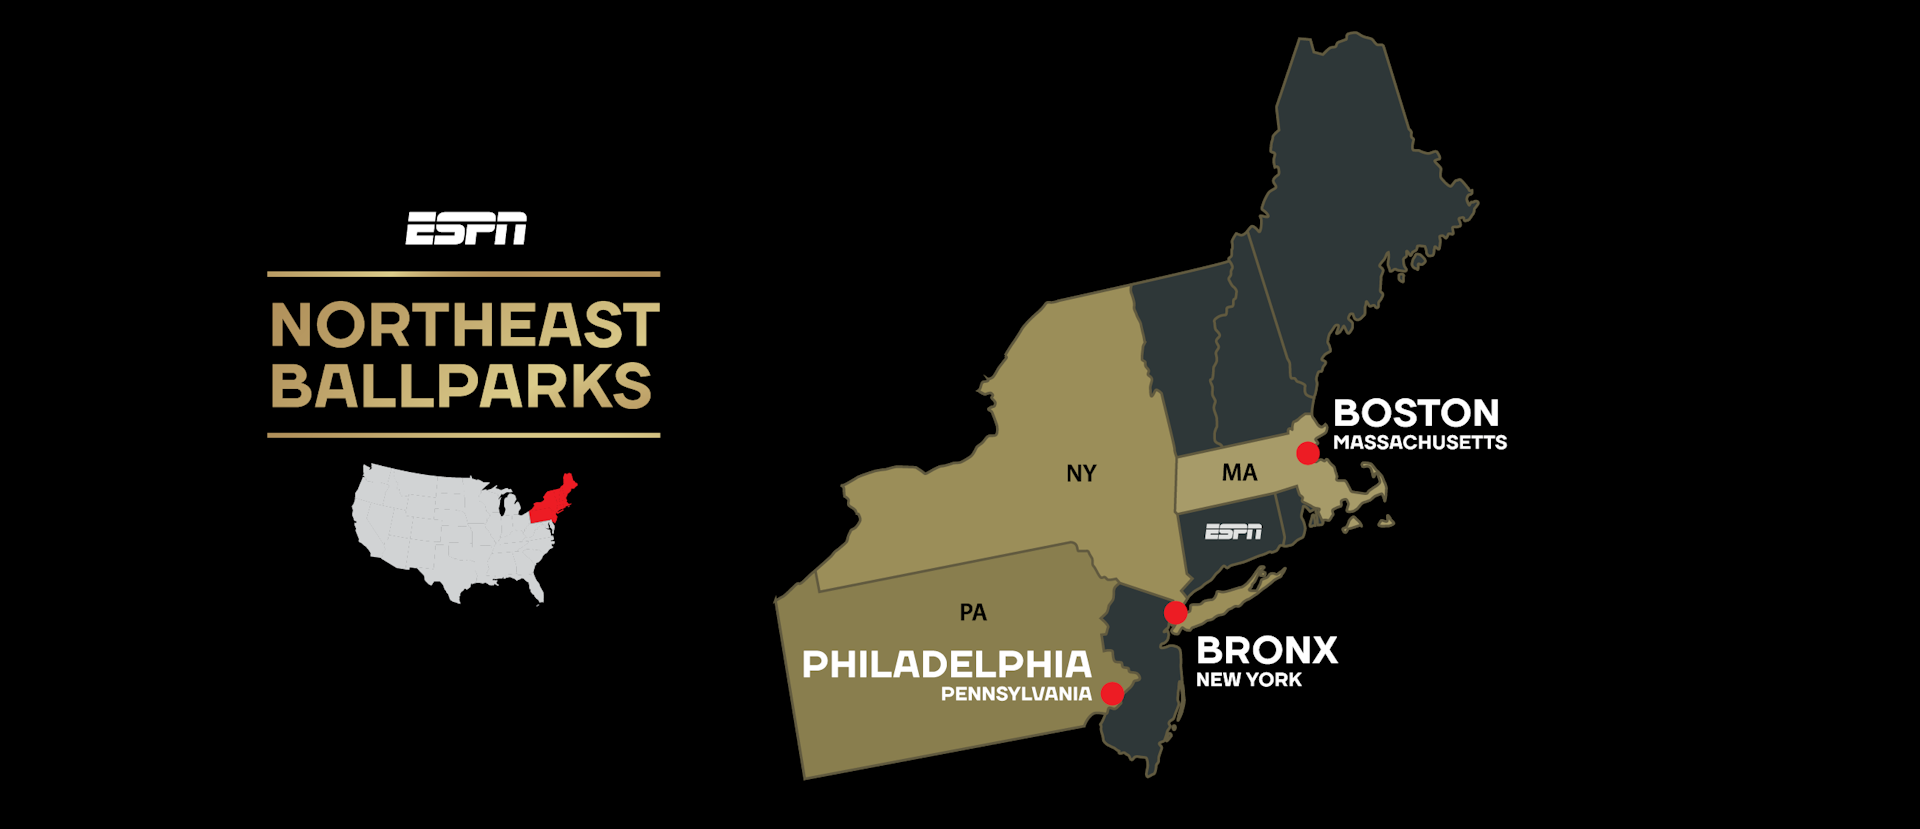 A map of the American Northeast, highlighting the destinations of the trip: Boston, Massachusettes, Bronx, New York, and Philadelphia, Pennsylvania